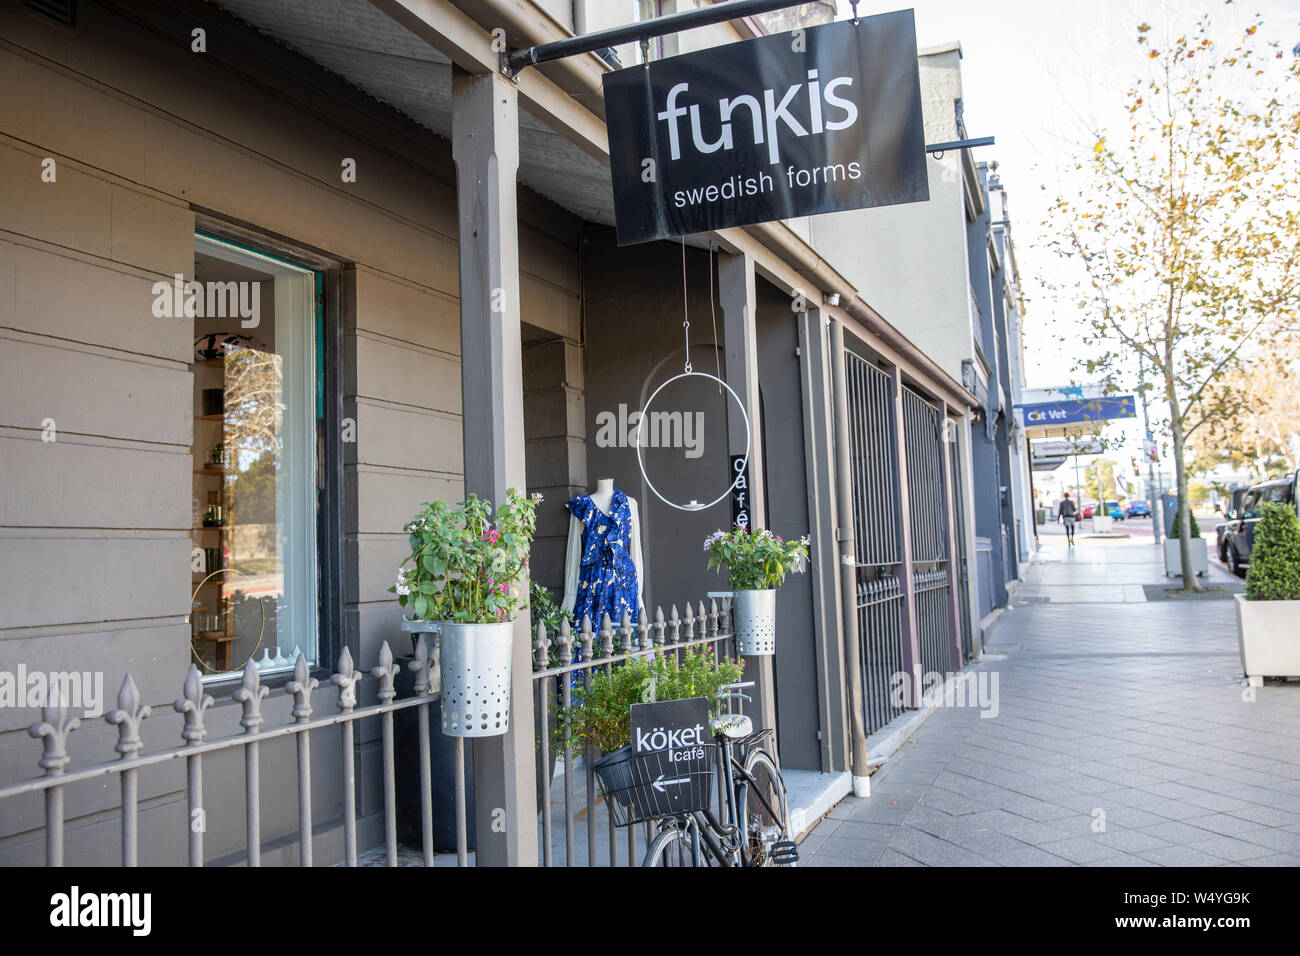 Funkis koket swedish form clothing and design store with cafe in oxford street,Paddington,Australia Stock Photo